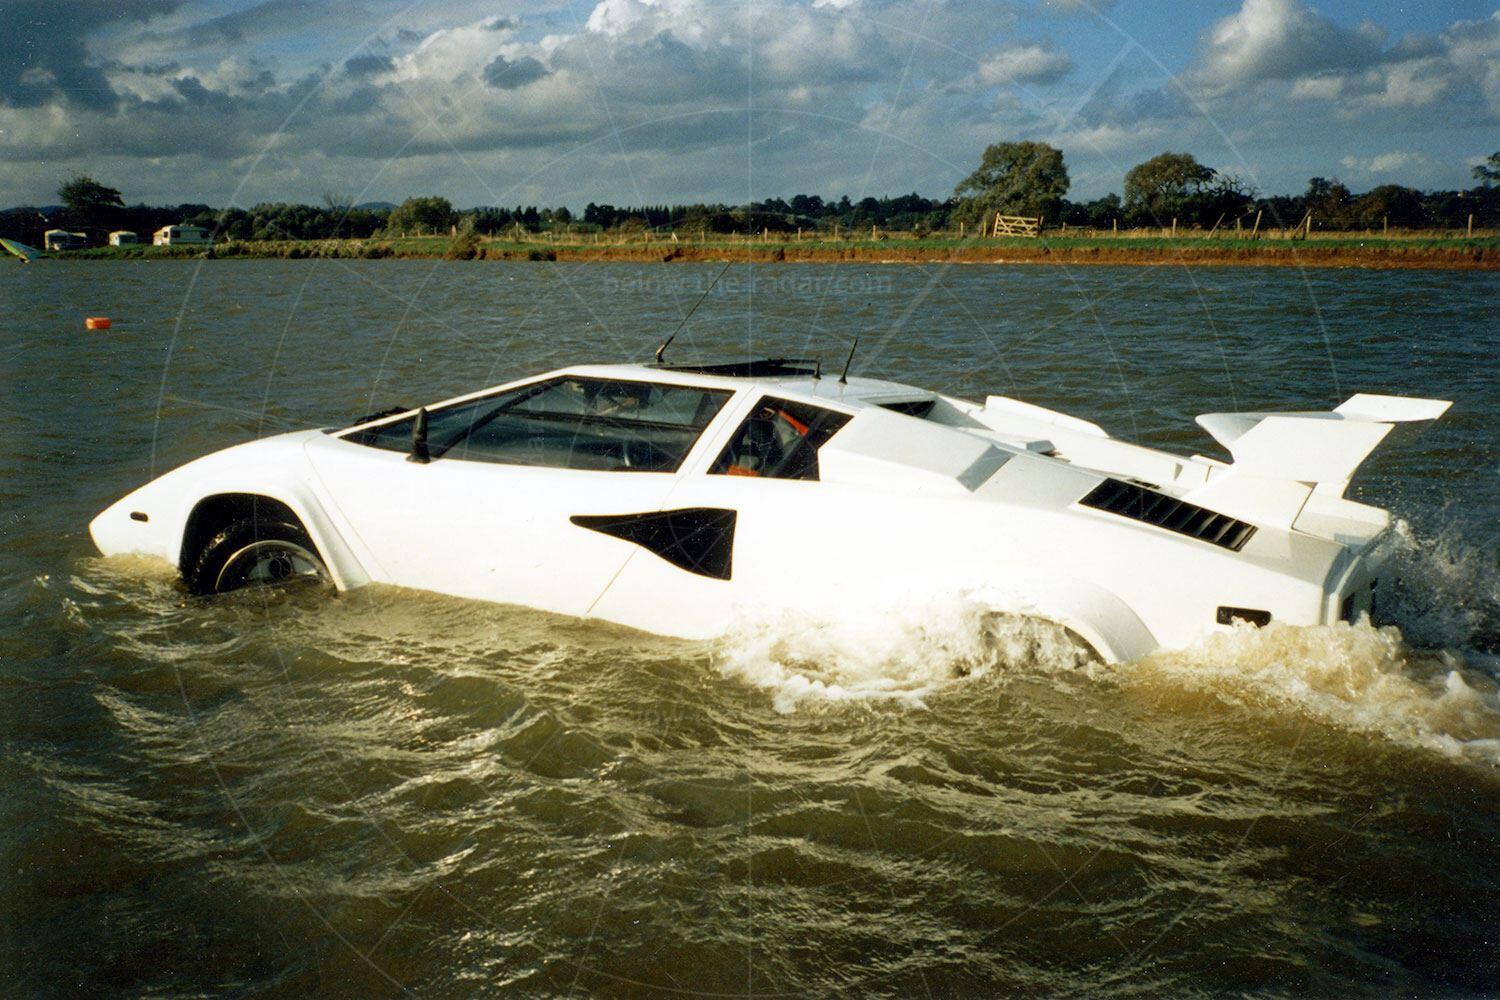 Mike Ryan's amphibious Lamborghini Countach Pic: magiccarpics.co.uk | Mike Ryan's amphibious Lamborghini Countach